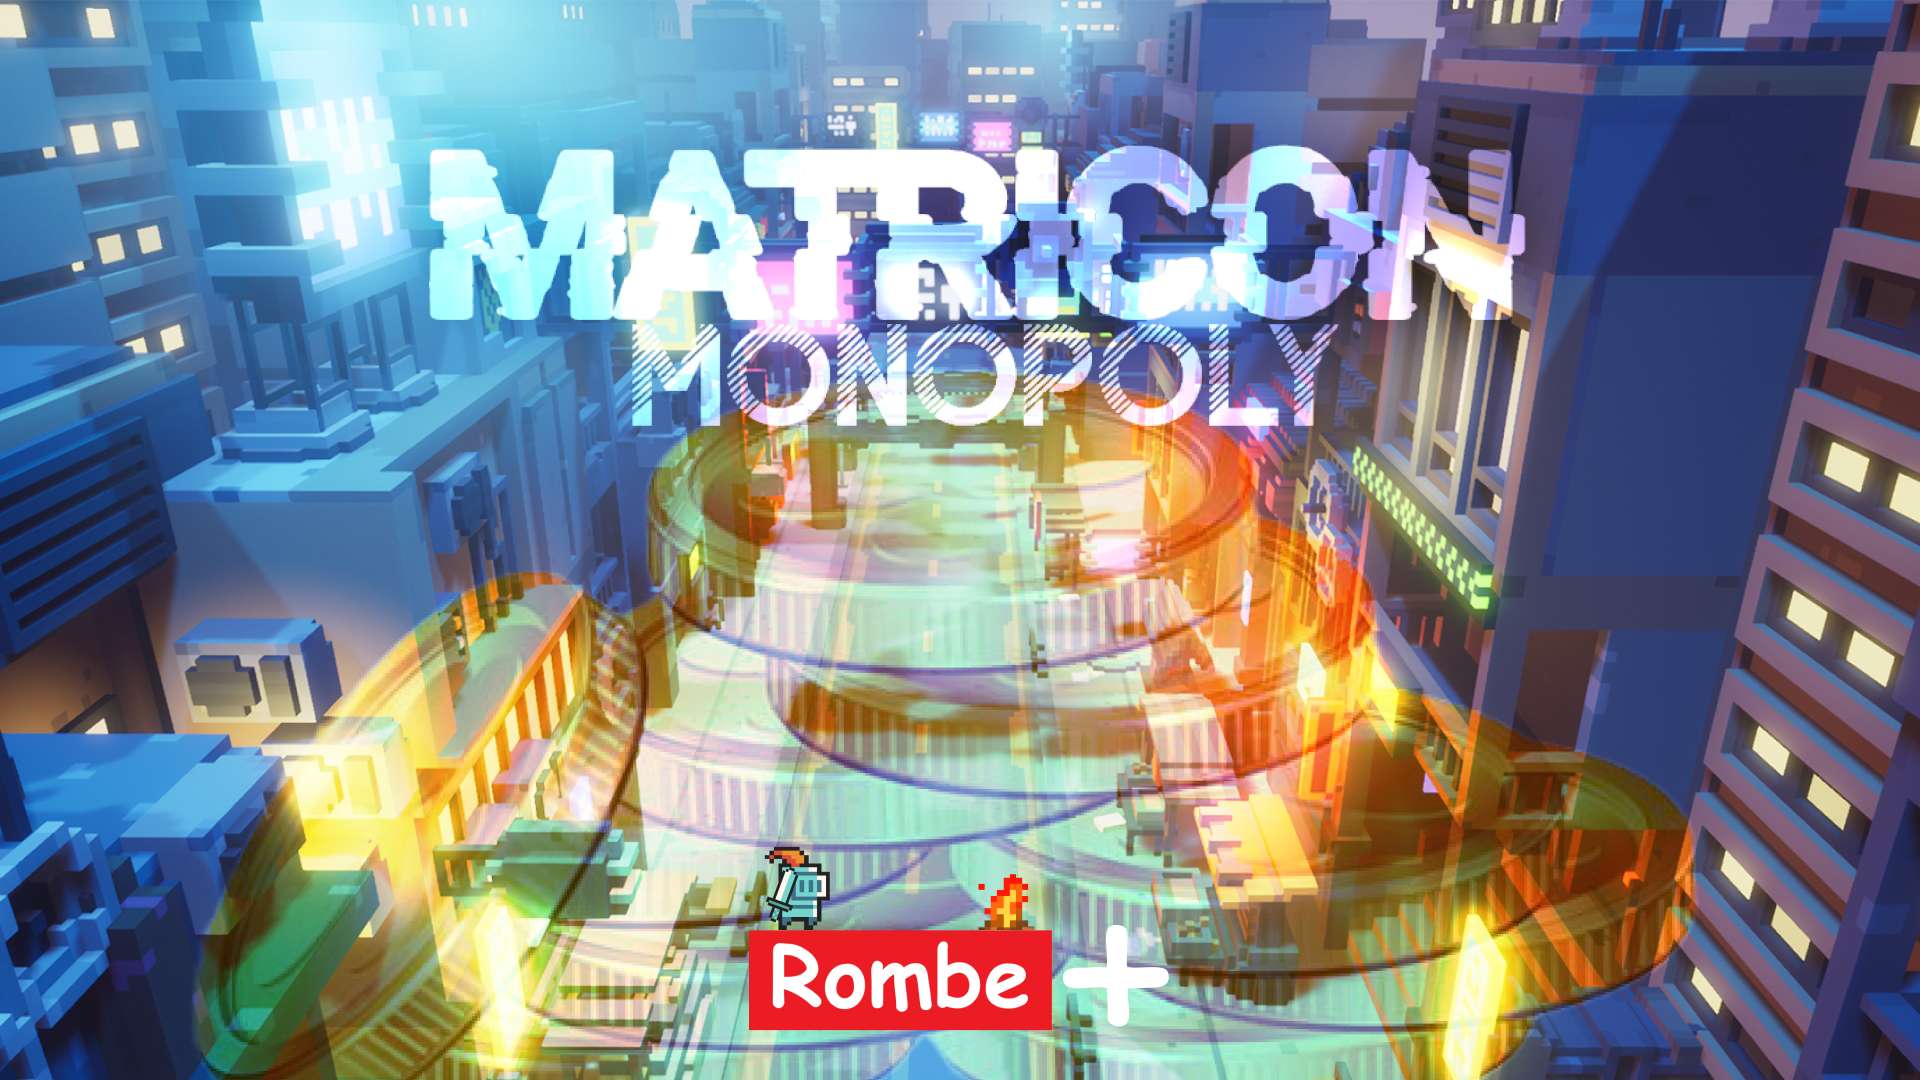 Matricon: Monopoly